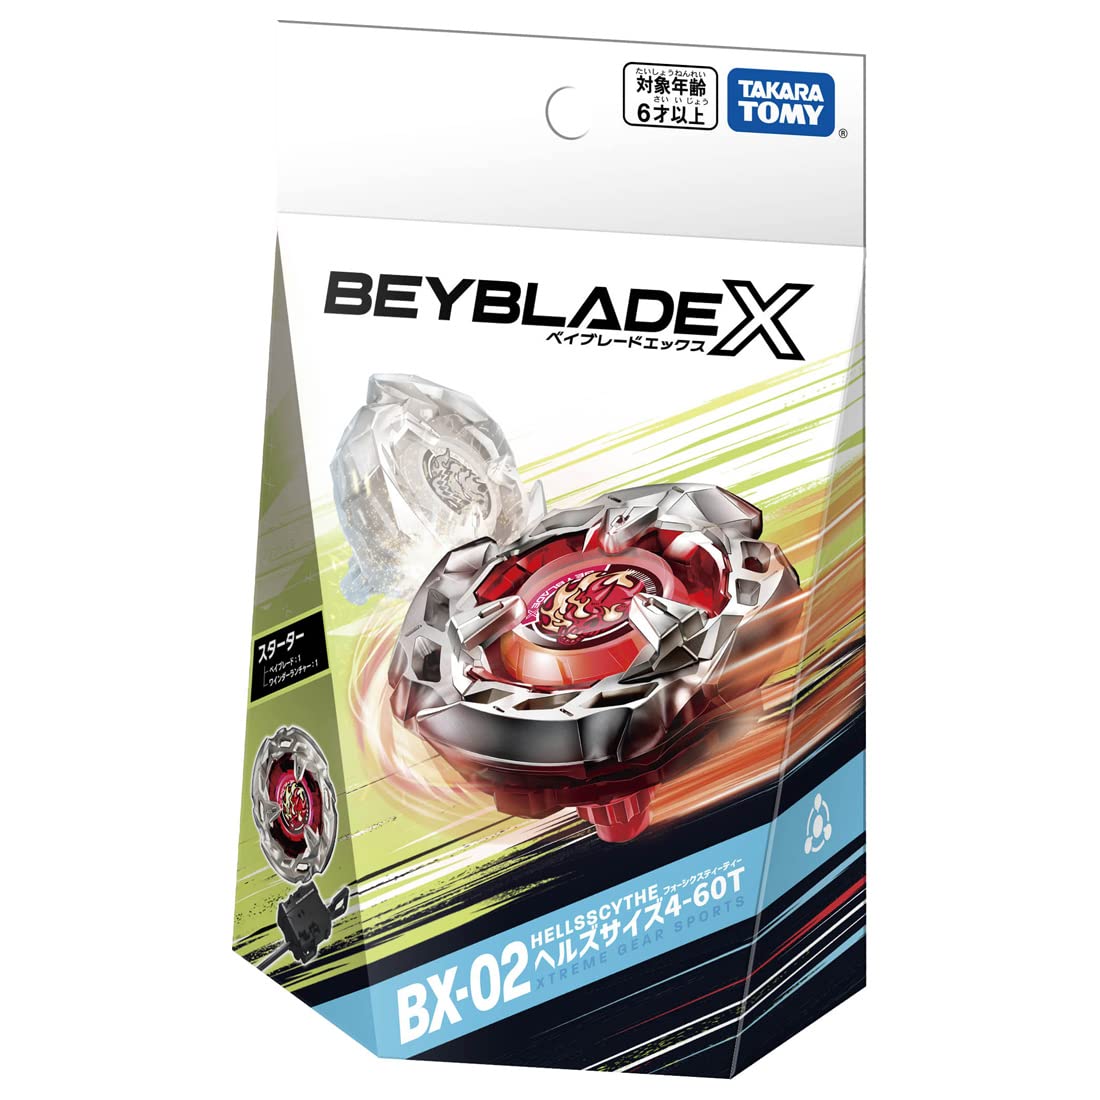 Beyblade X Beyblade X BX-02 Starter Hells Size 4-60T